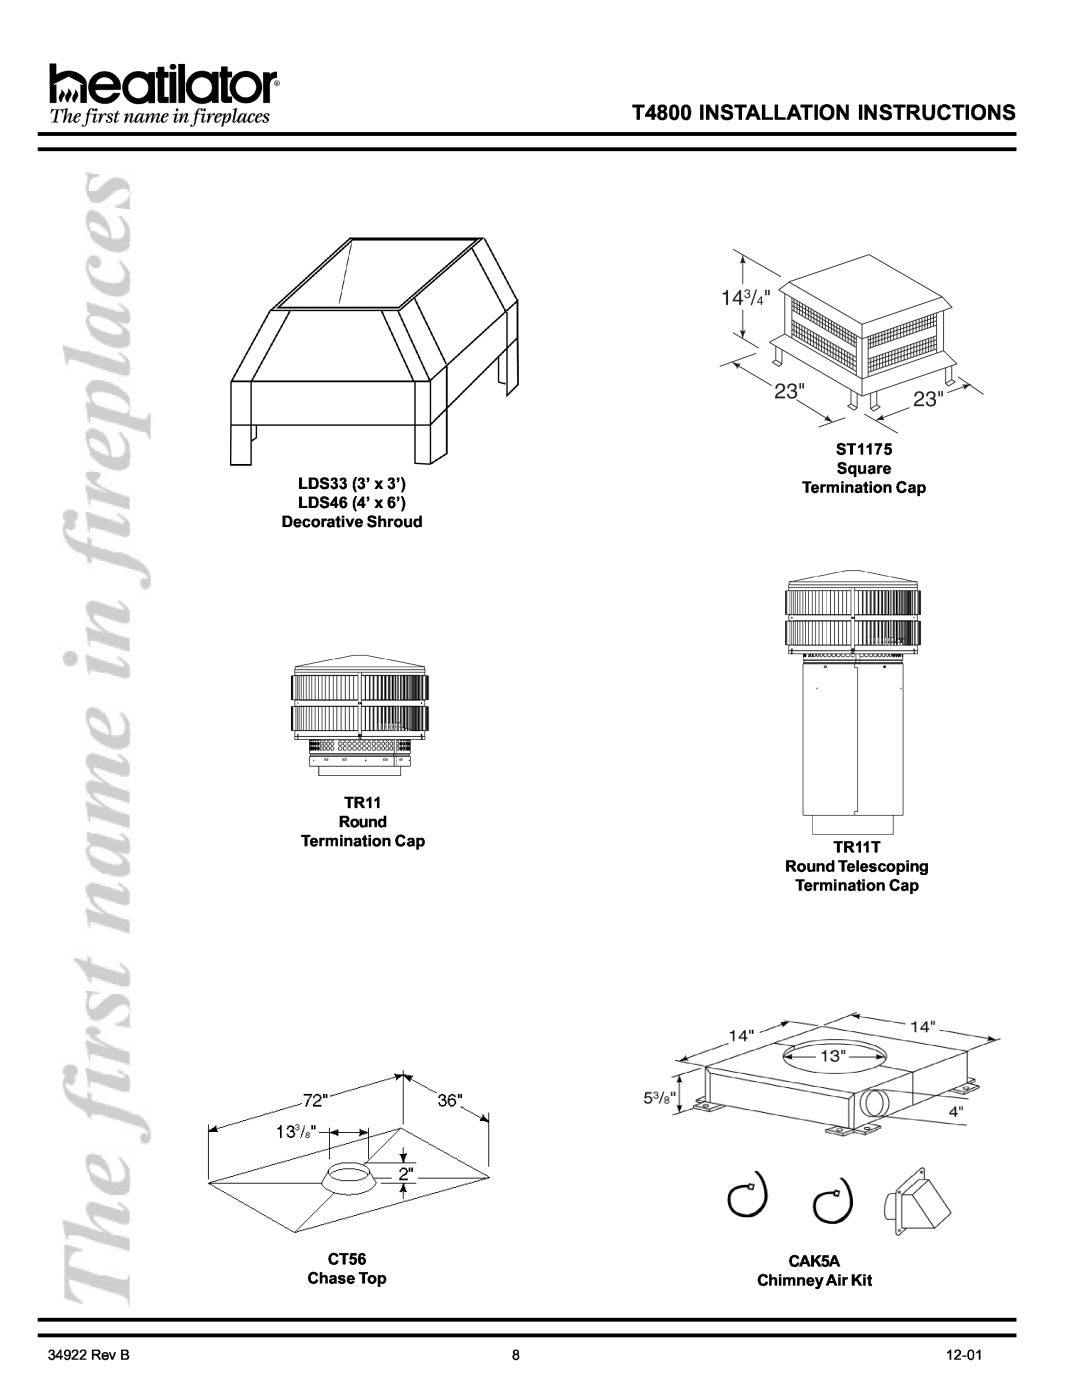 Heatiator T4800 ST1175 Square LDS33 3’ x 3’Termination Cap, LDS46 4’ x 6’ Decorative Shroud TR11 Round, CT56, CAK5A, Rev B 